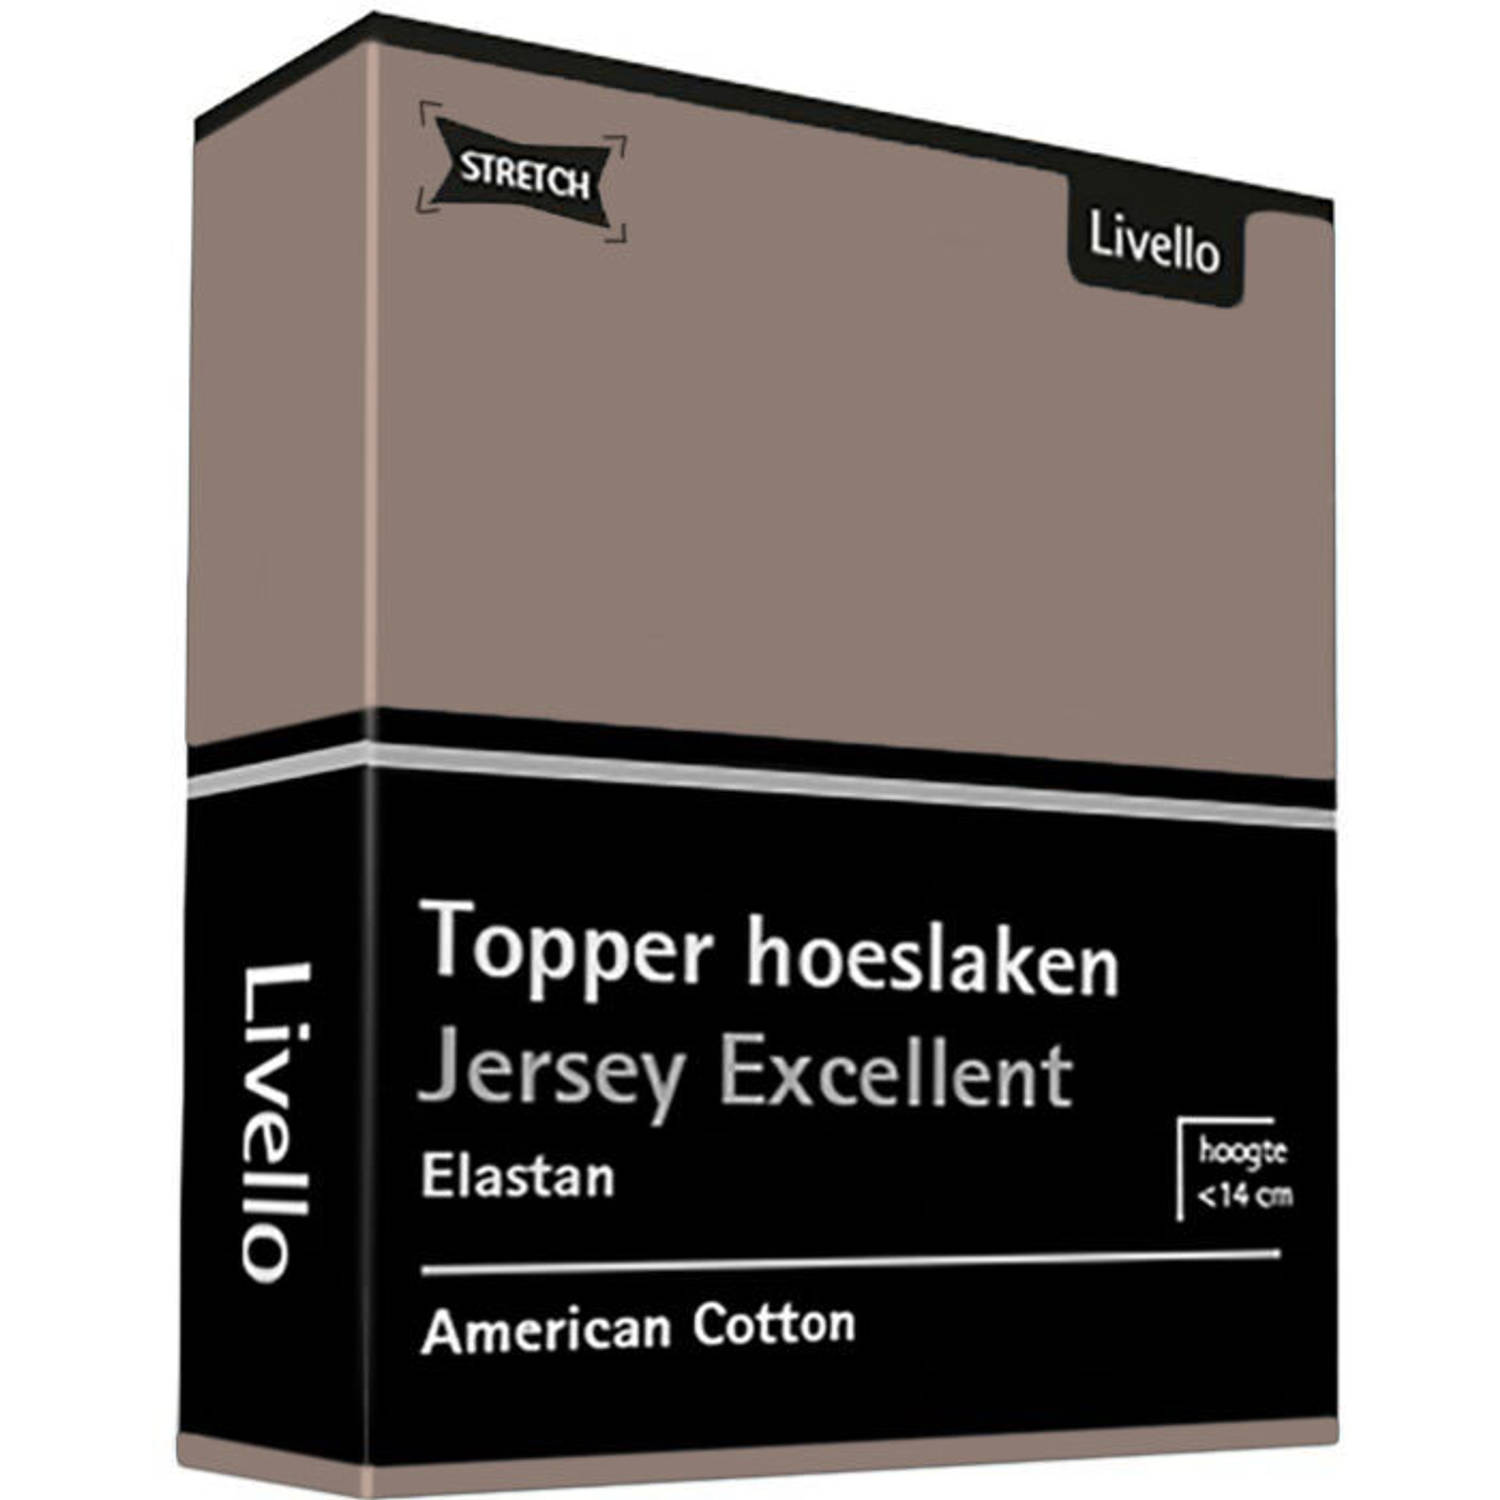 Livello Hoeslaken Topper Jersey Excellent Taupe 250 gr 140x200 t/m 160x220